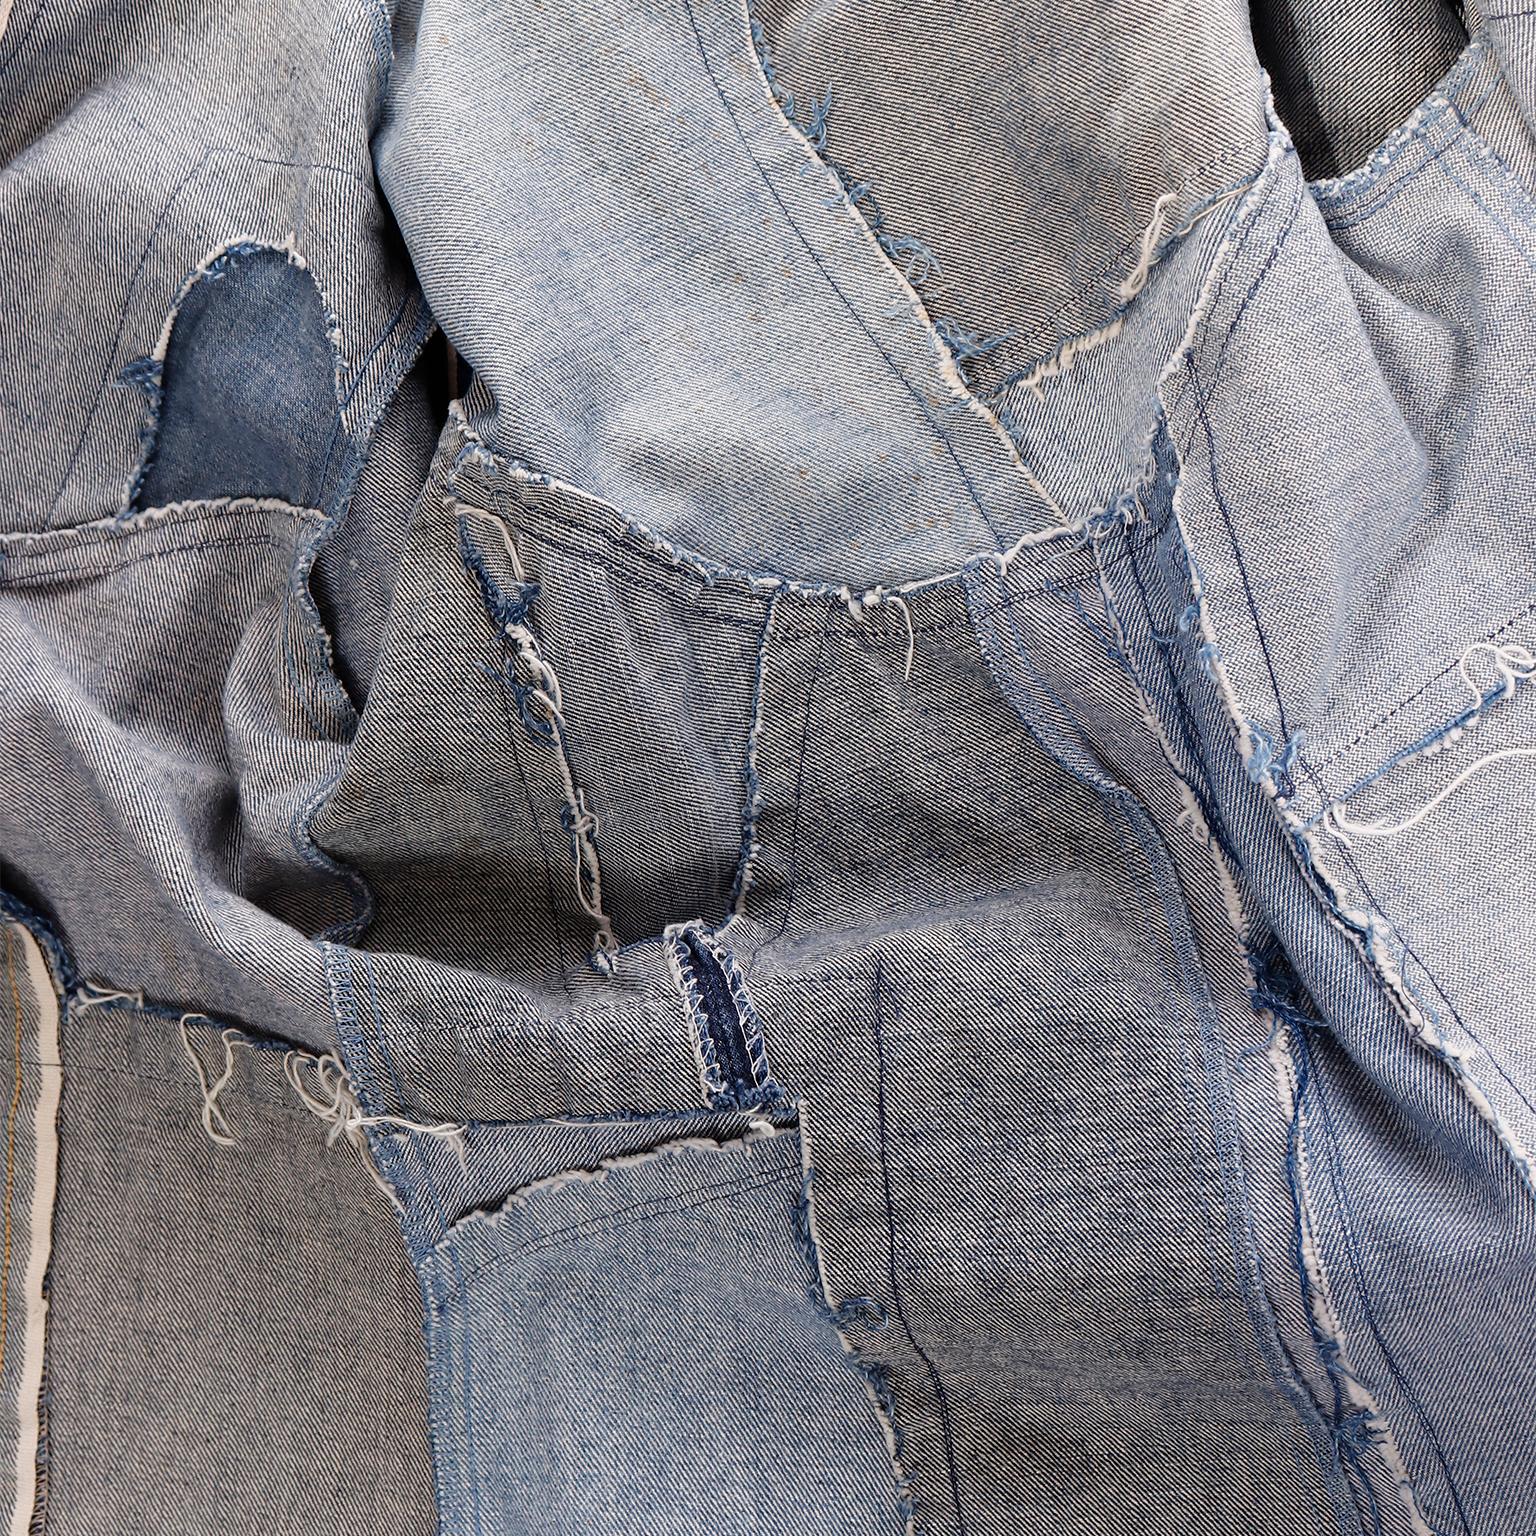 Simis Vintage 1970s Patchwork Denim Jeans and Button Front Shirt 2 Pc Outfit 11